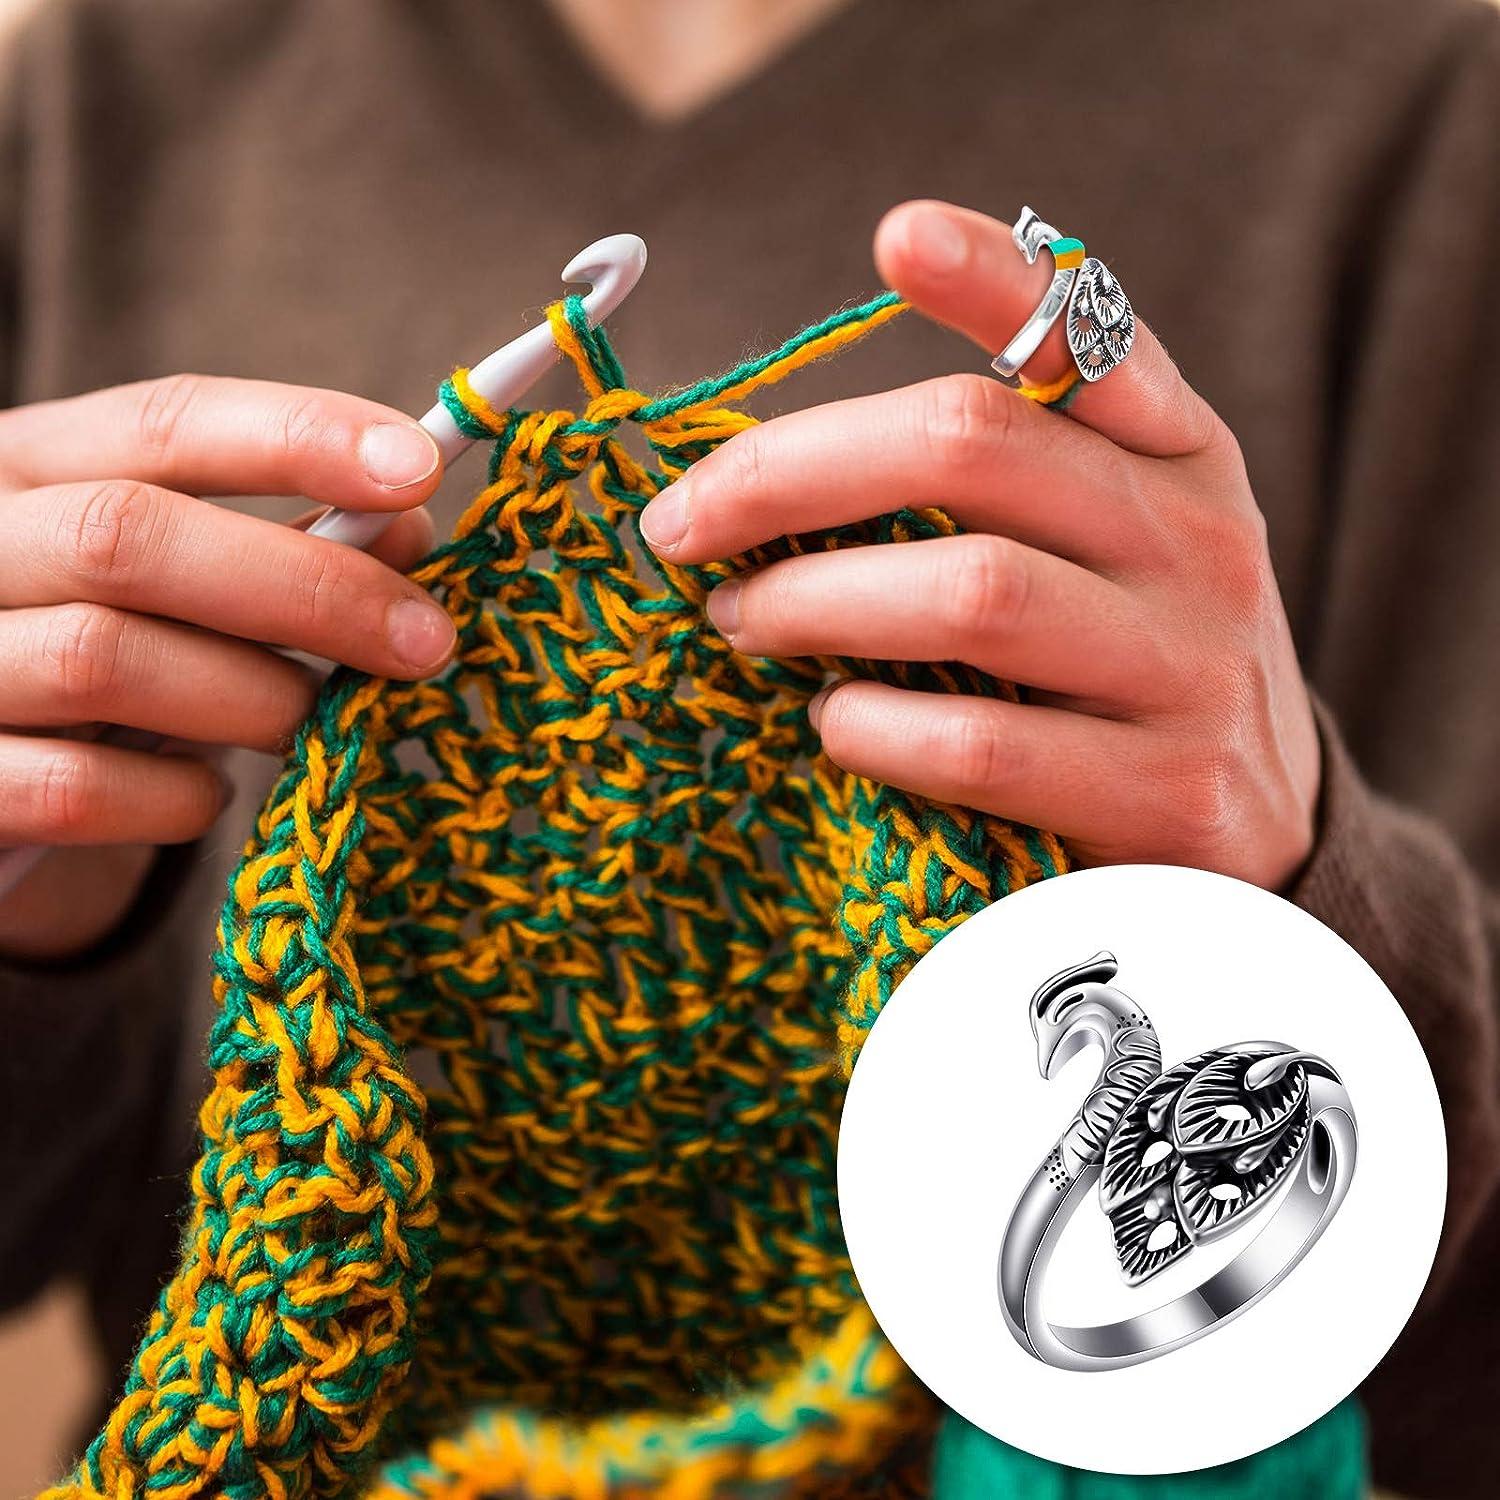 Knitting Ring Adjustable Fingers Metal Open Yarn Guide Crochet